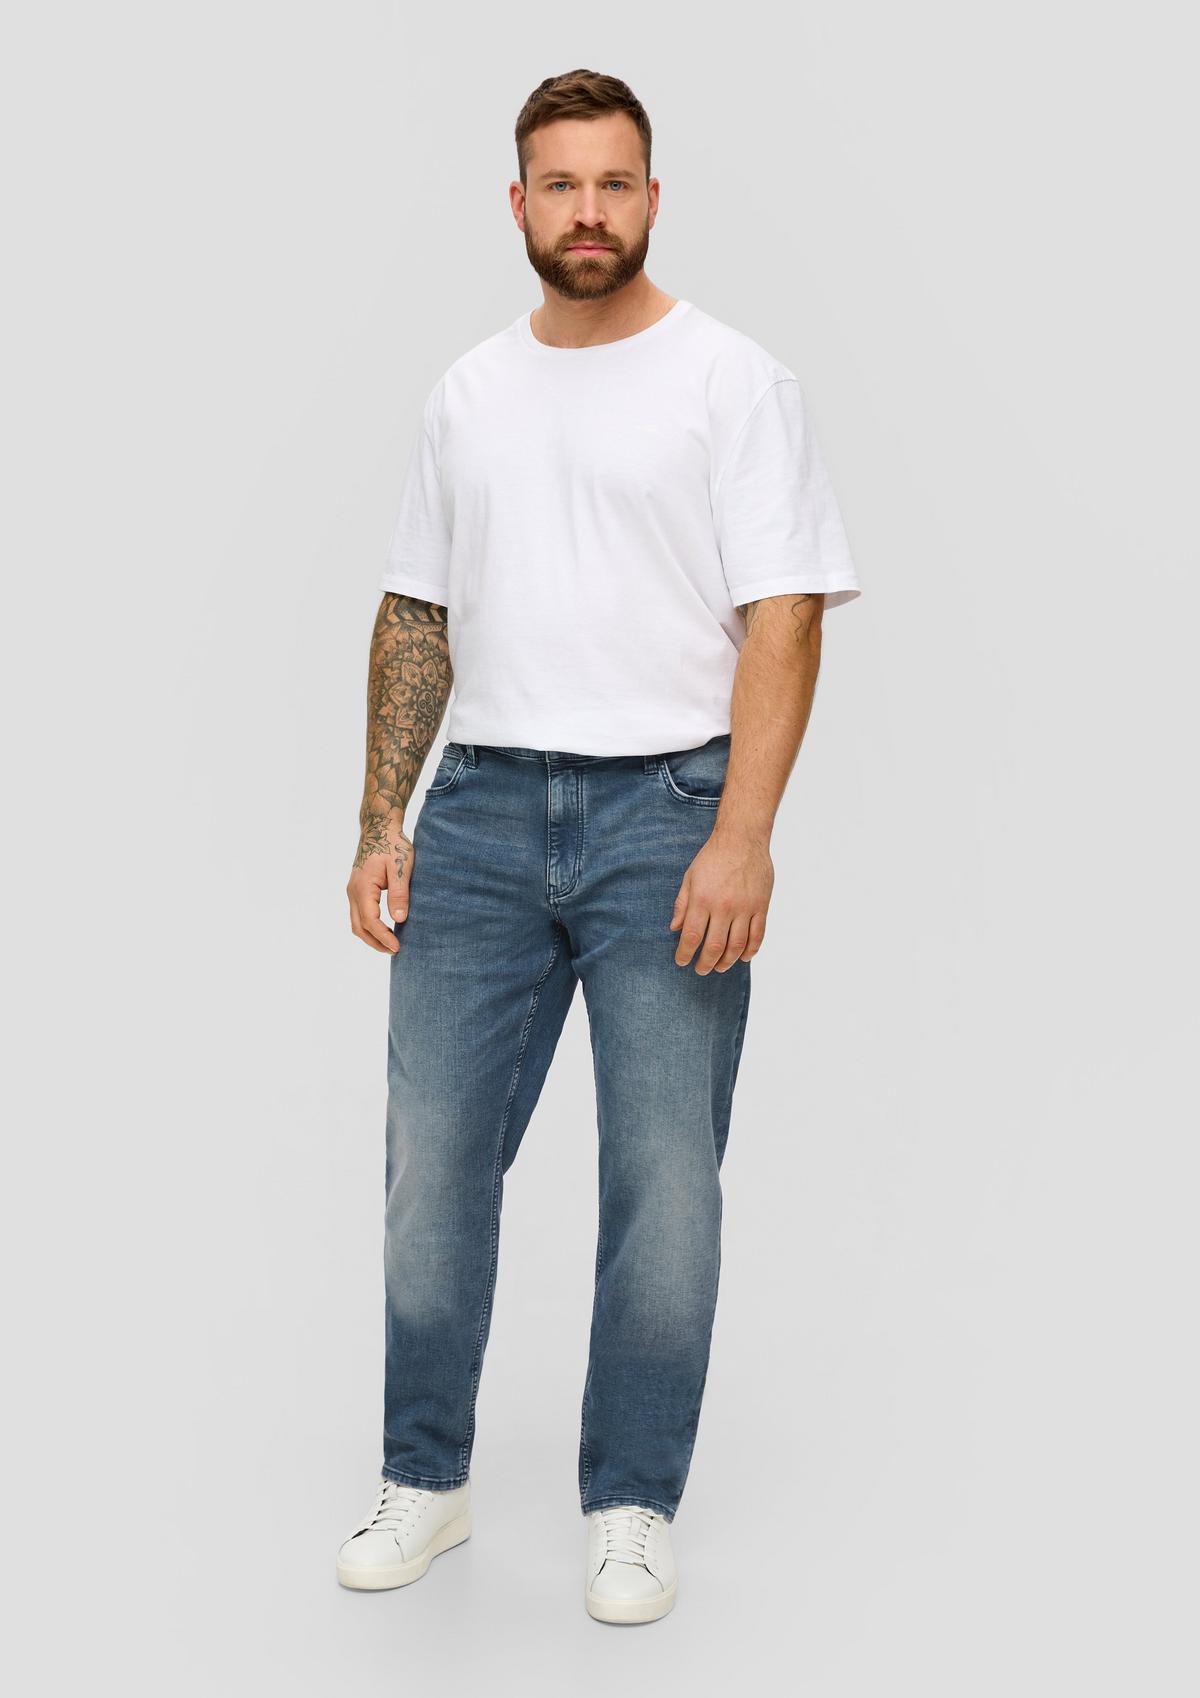 York jeans / regular fit / mid rise / regular leg - blue